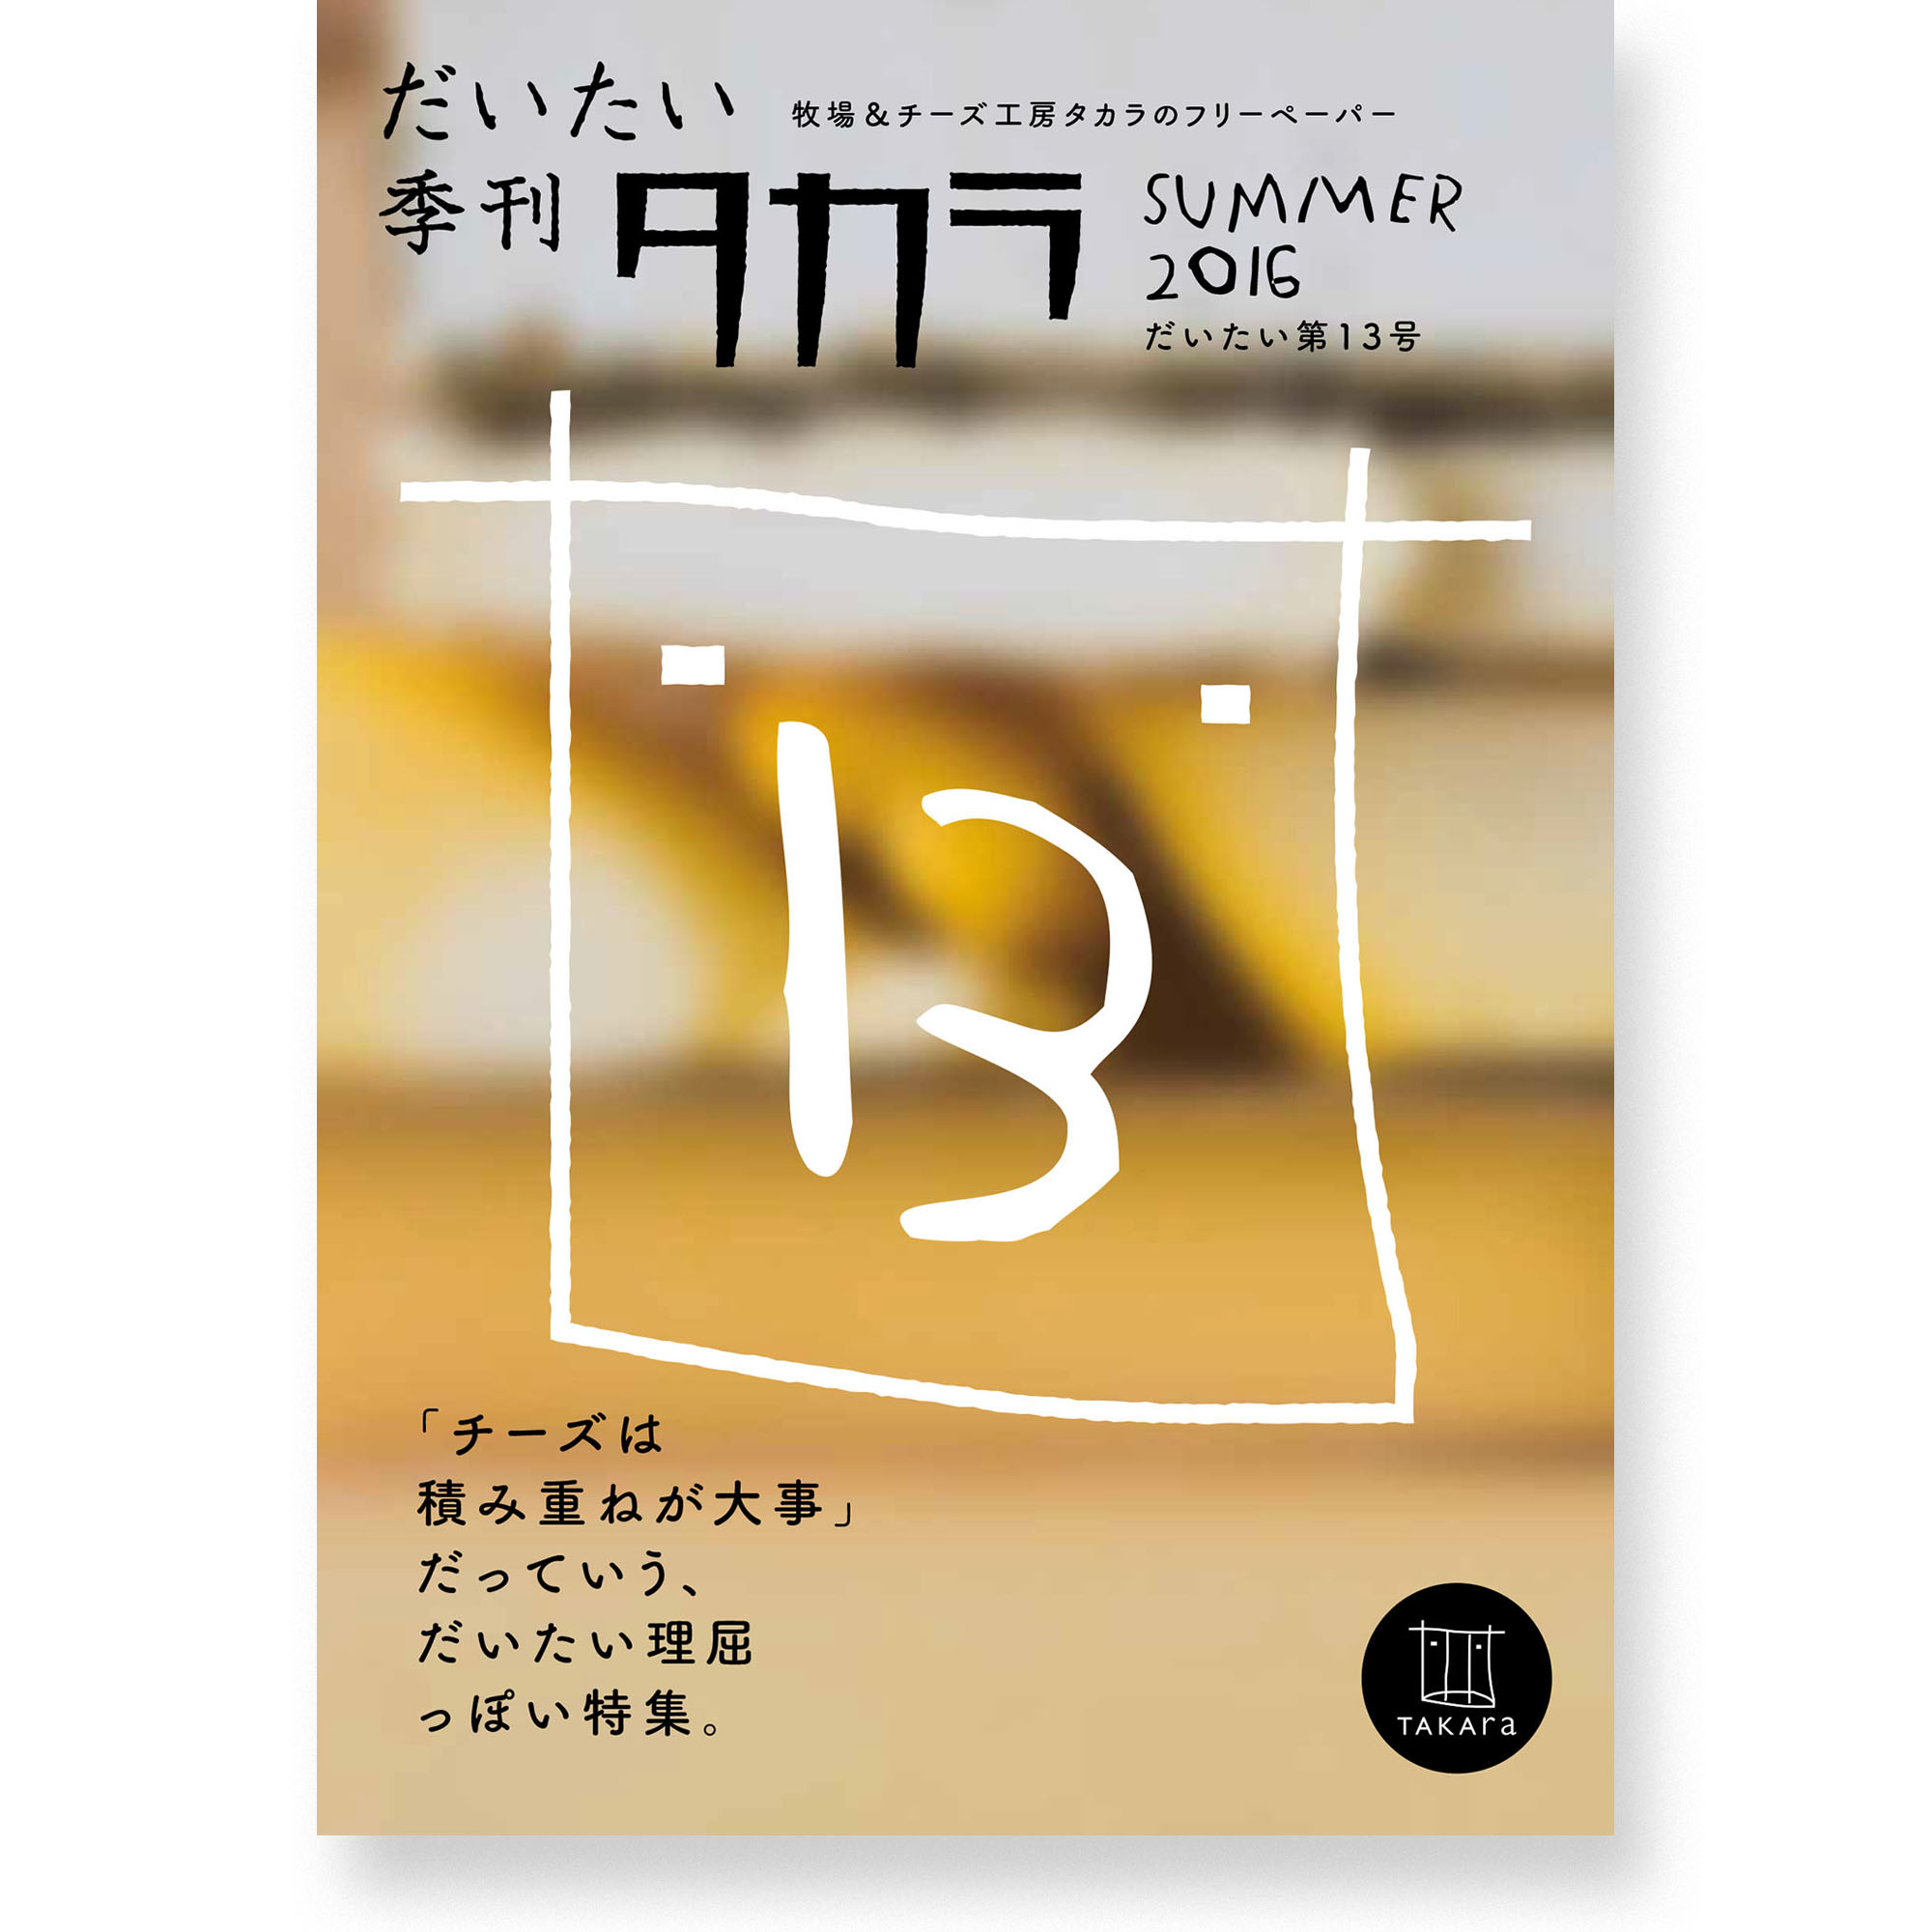 Daitai Quarterly Takara Vol.13